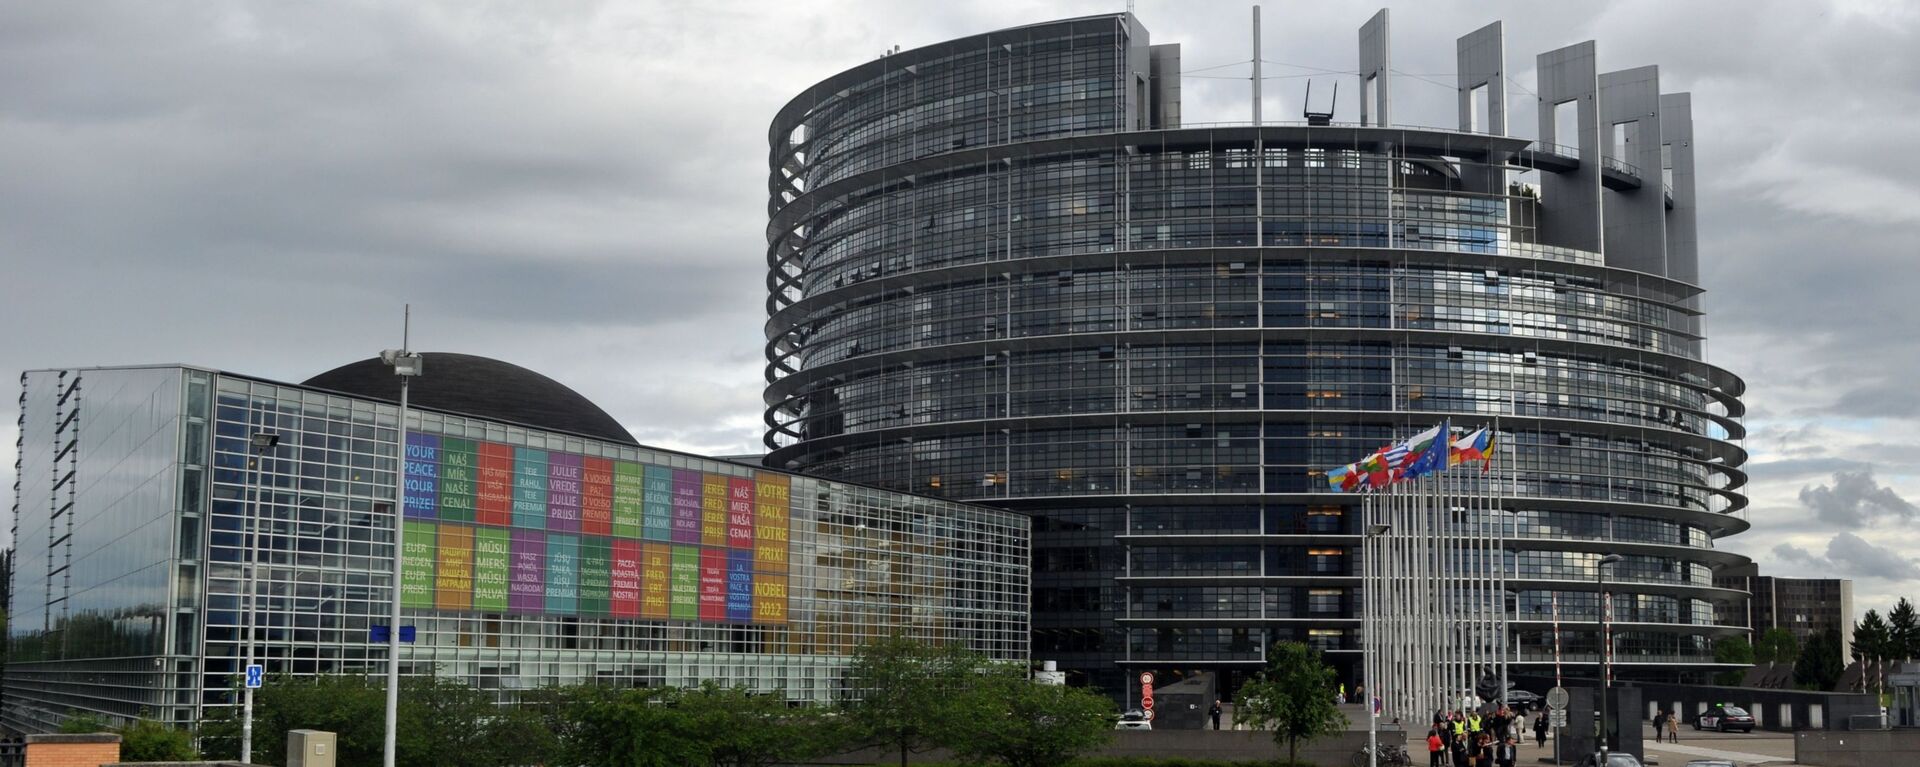 Здание Европейского парламента в Страсбурге, Франция, архивное фото - Sputnik Литва, 1920, 17.09.2021